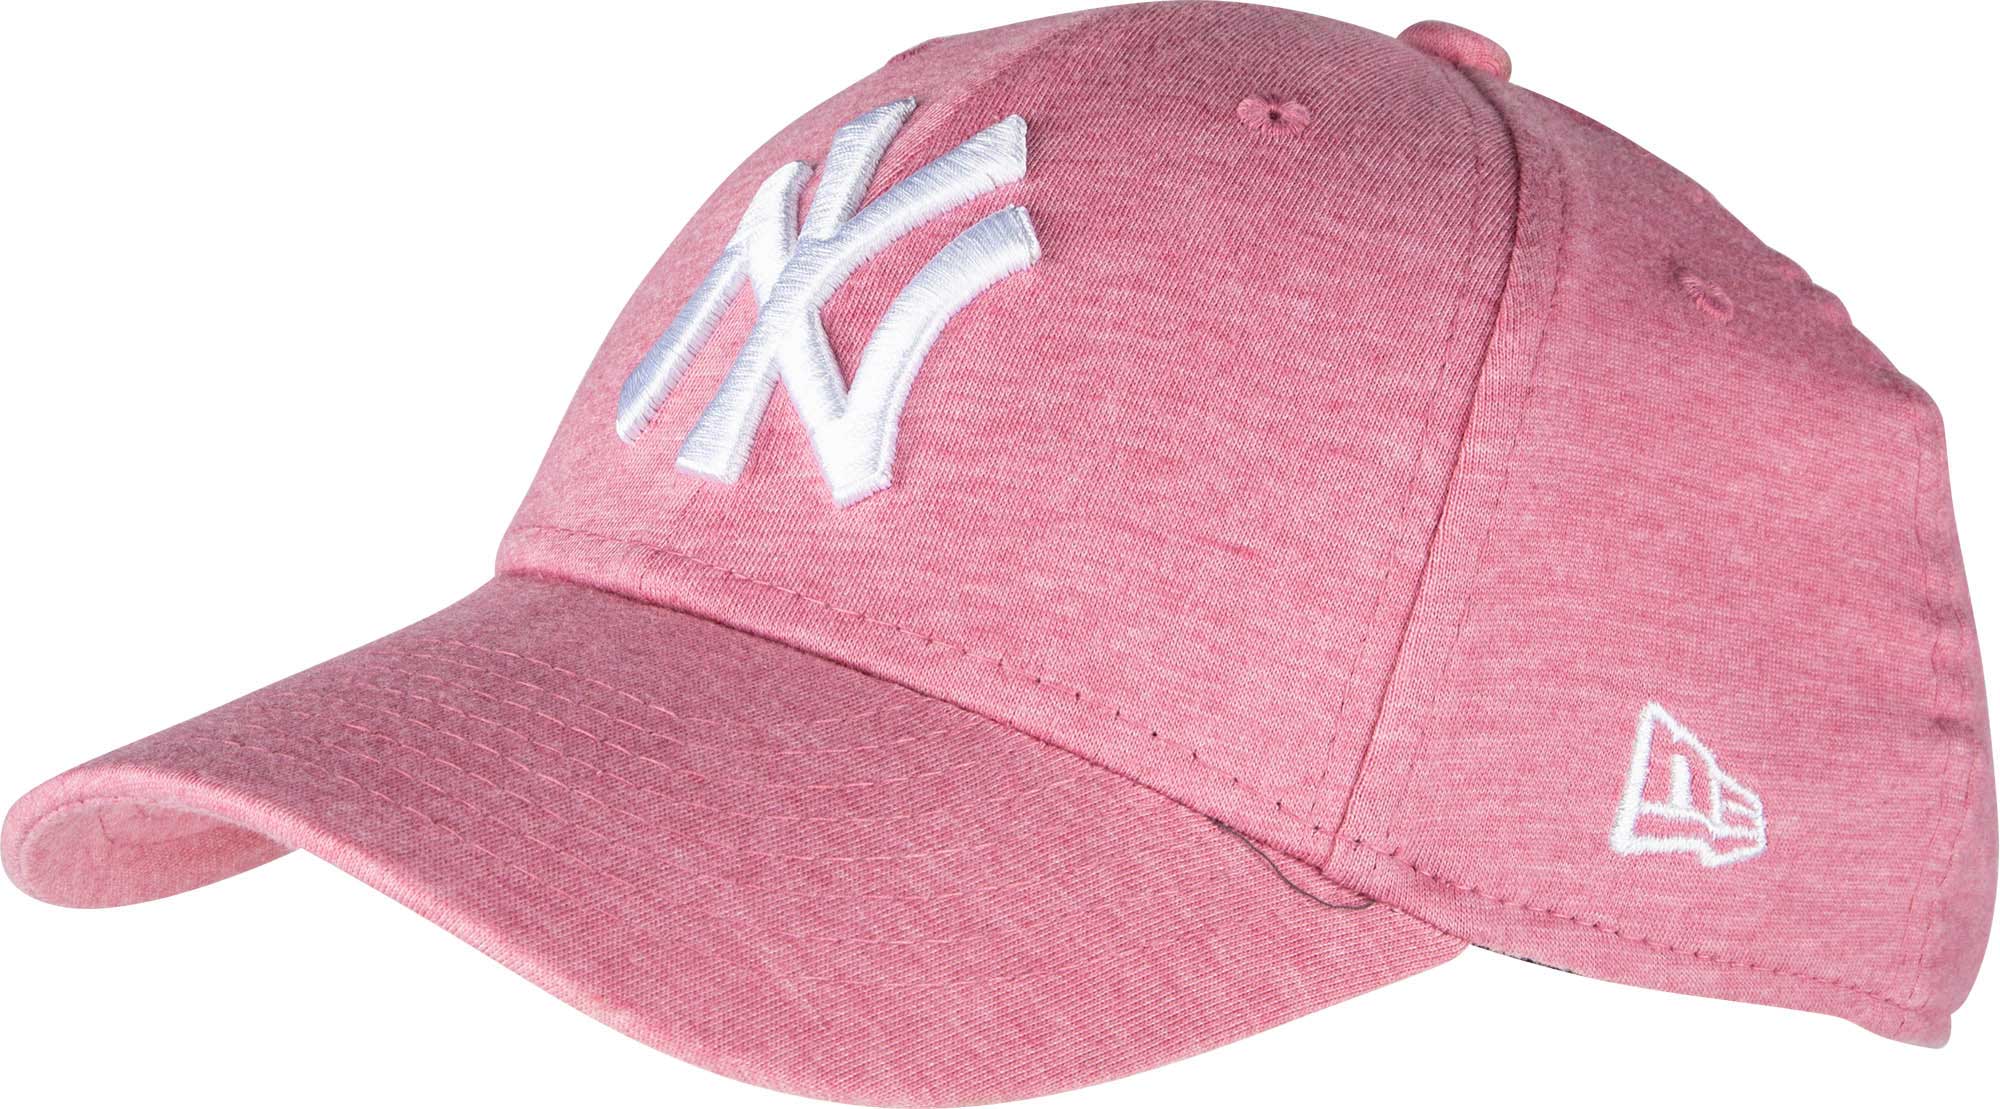 Kids’ club baseball cap